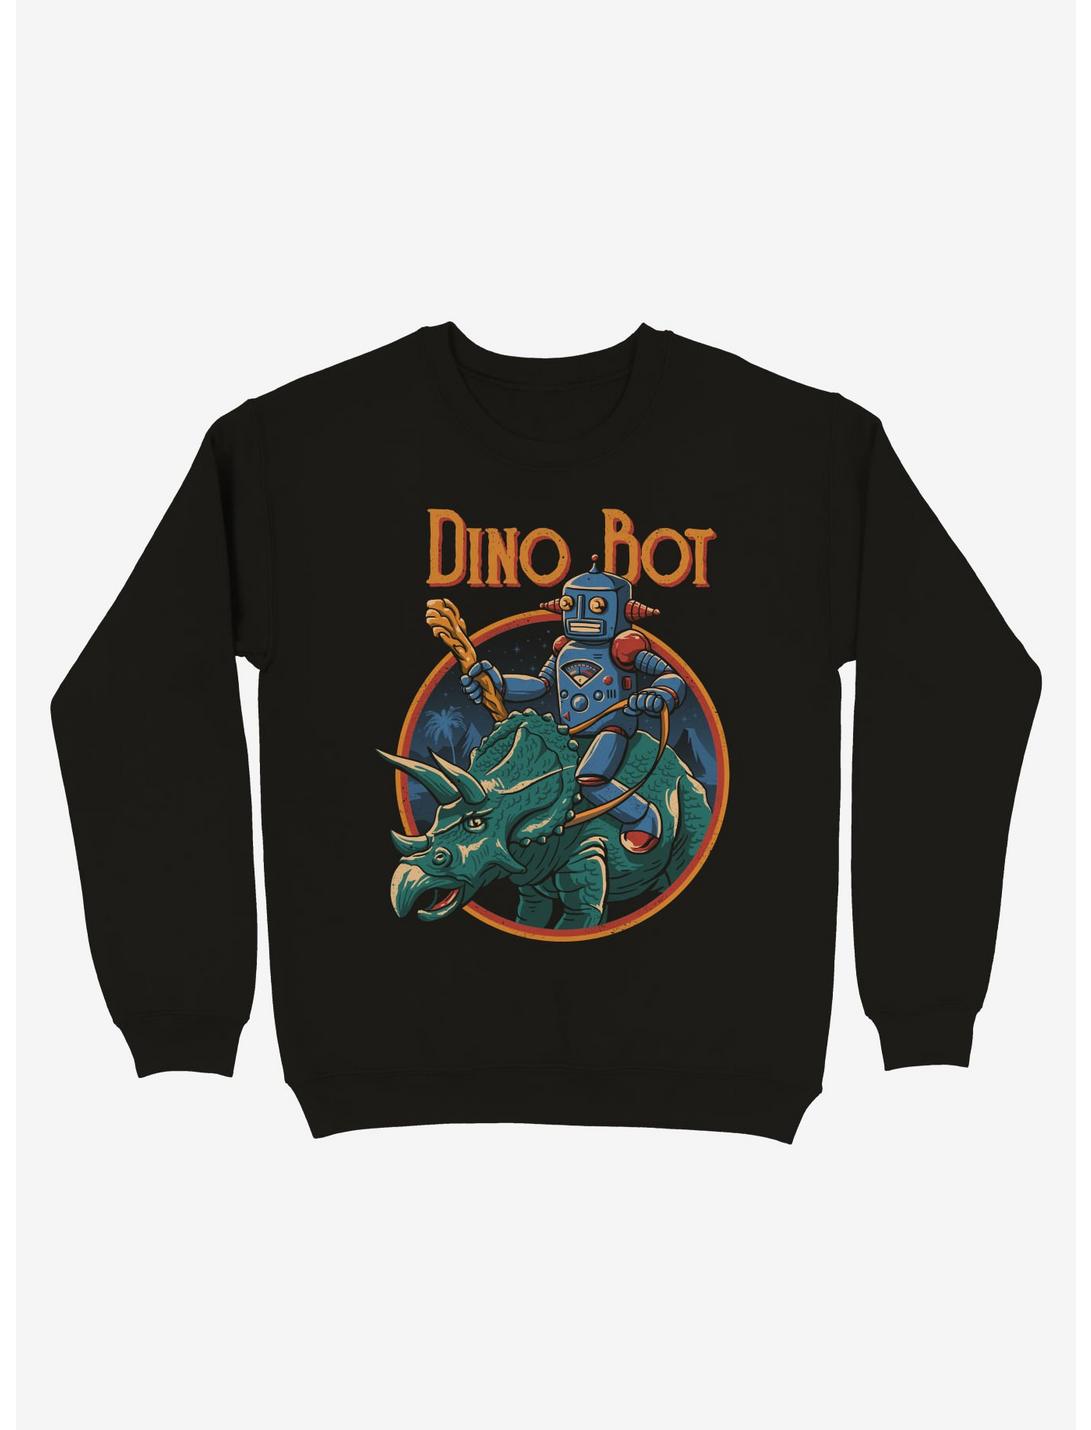 Dinosaur Bot 2 Sweatshirt, BLACK, hi-res